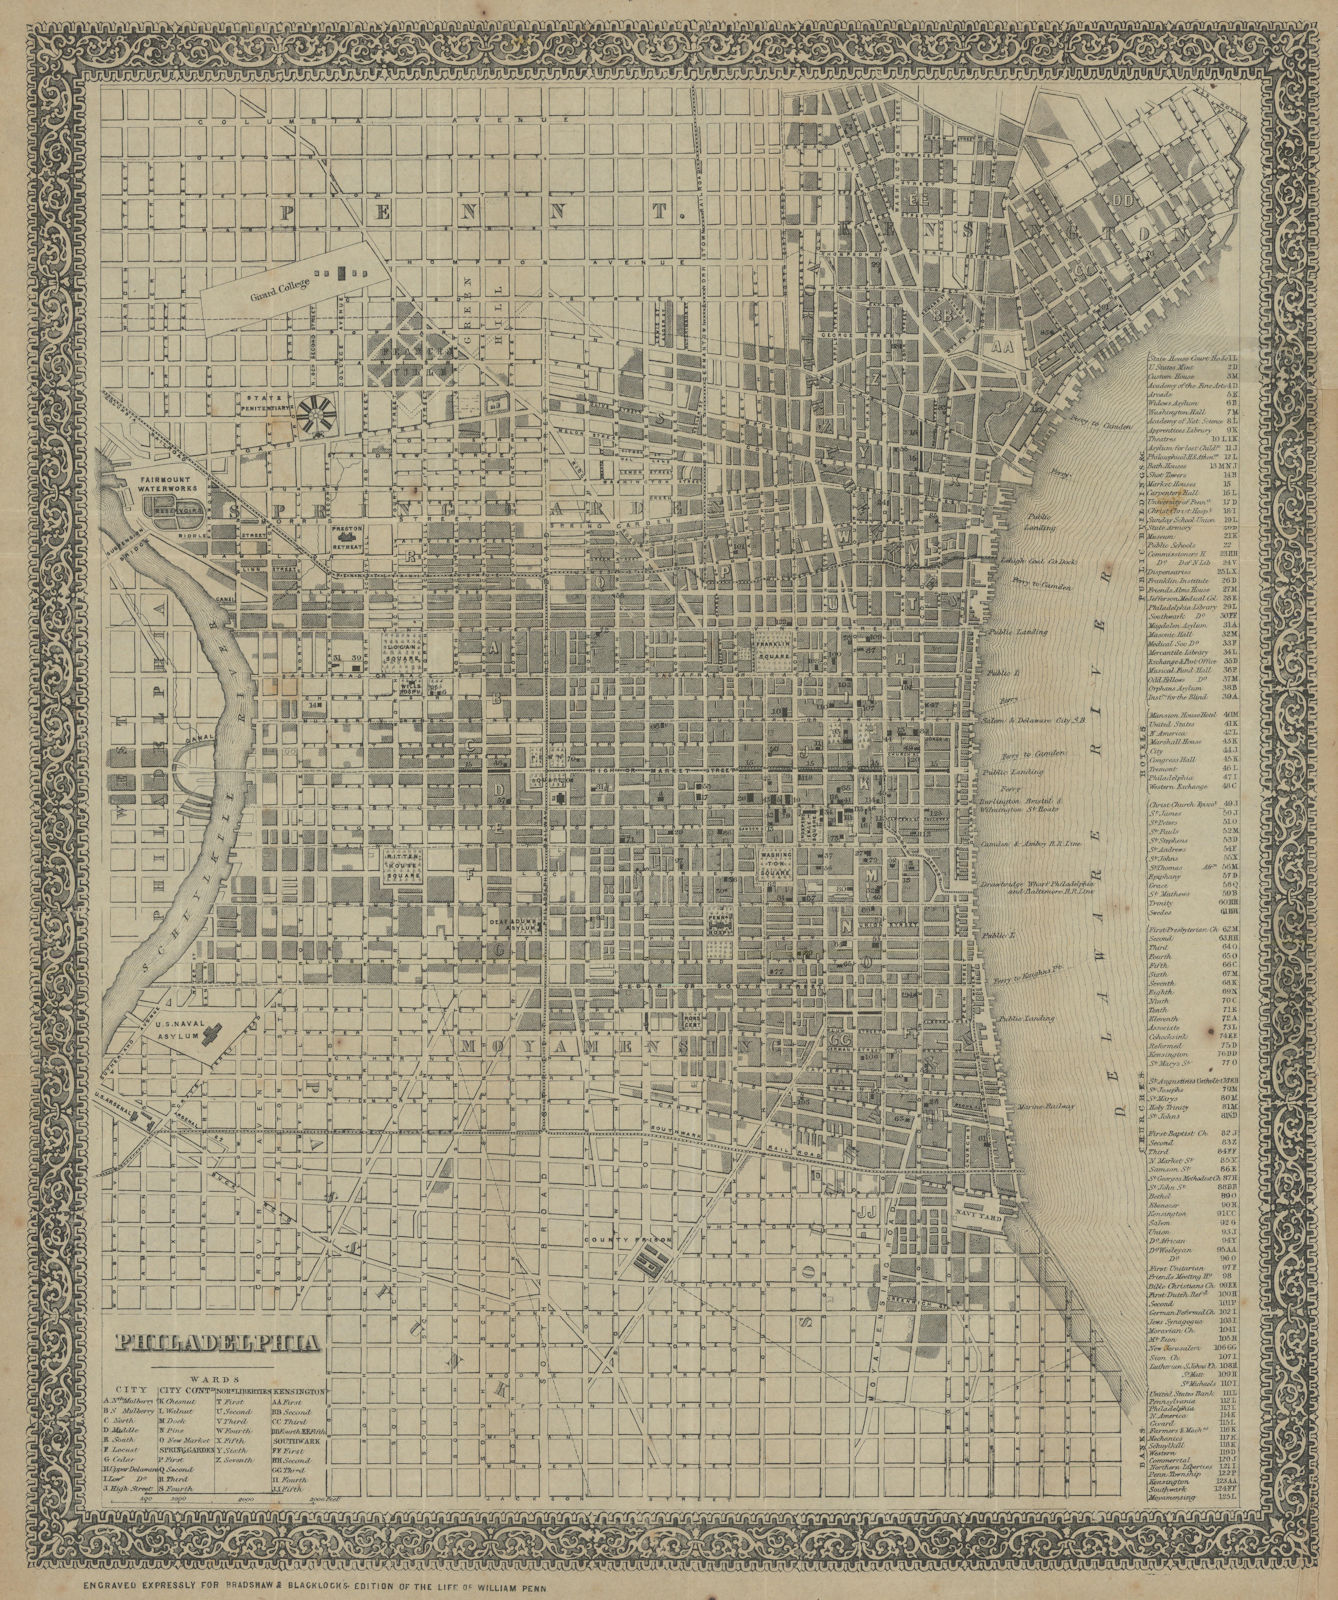 Associate Product Philadelphia town city plan by Bradshaw & Blacklock 1849 old antique map chart